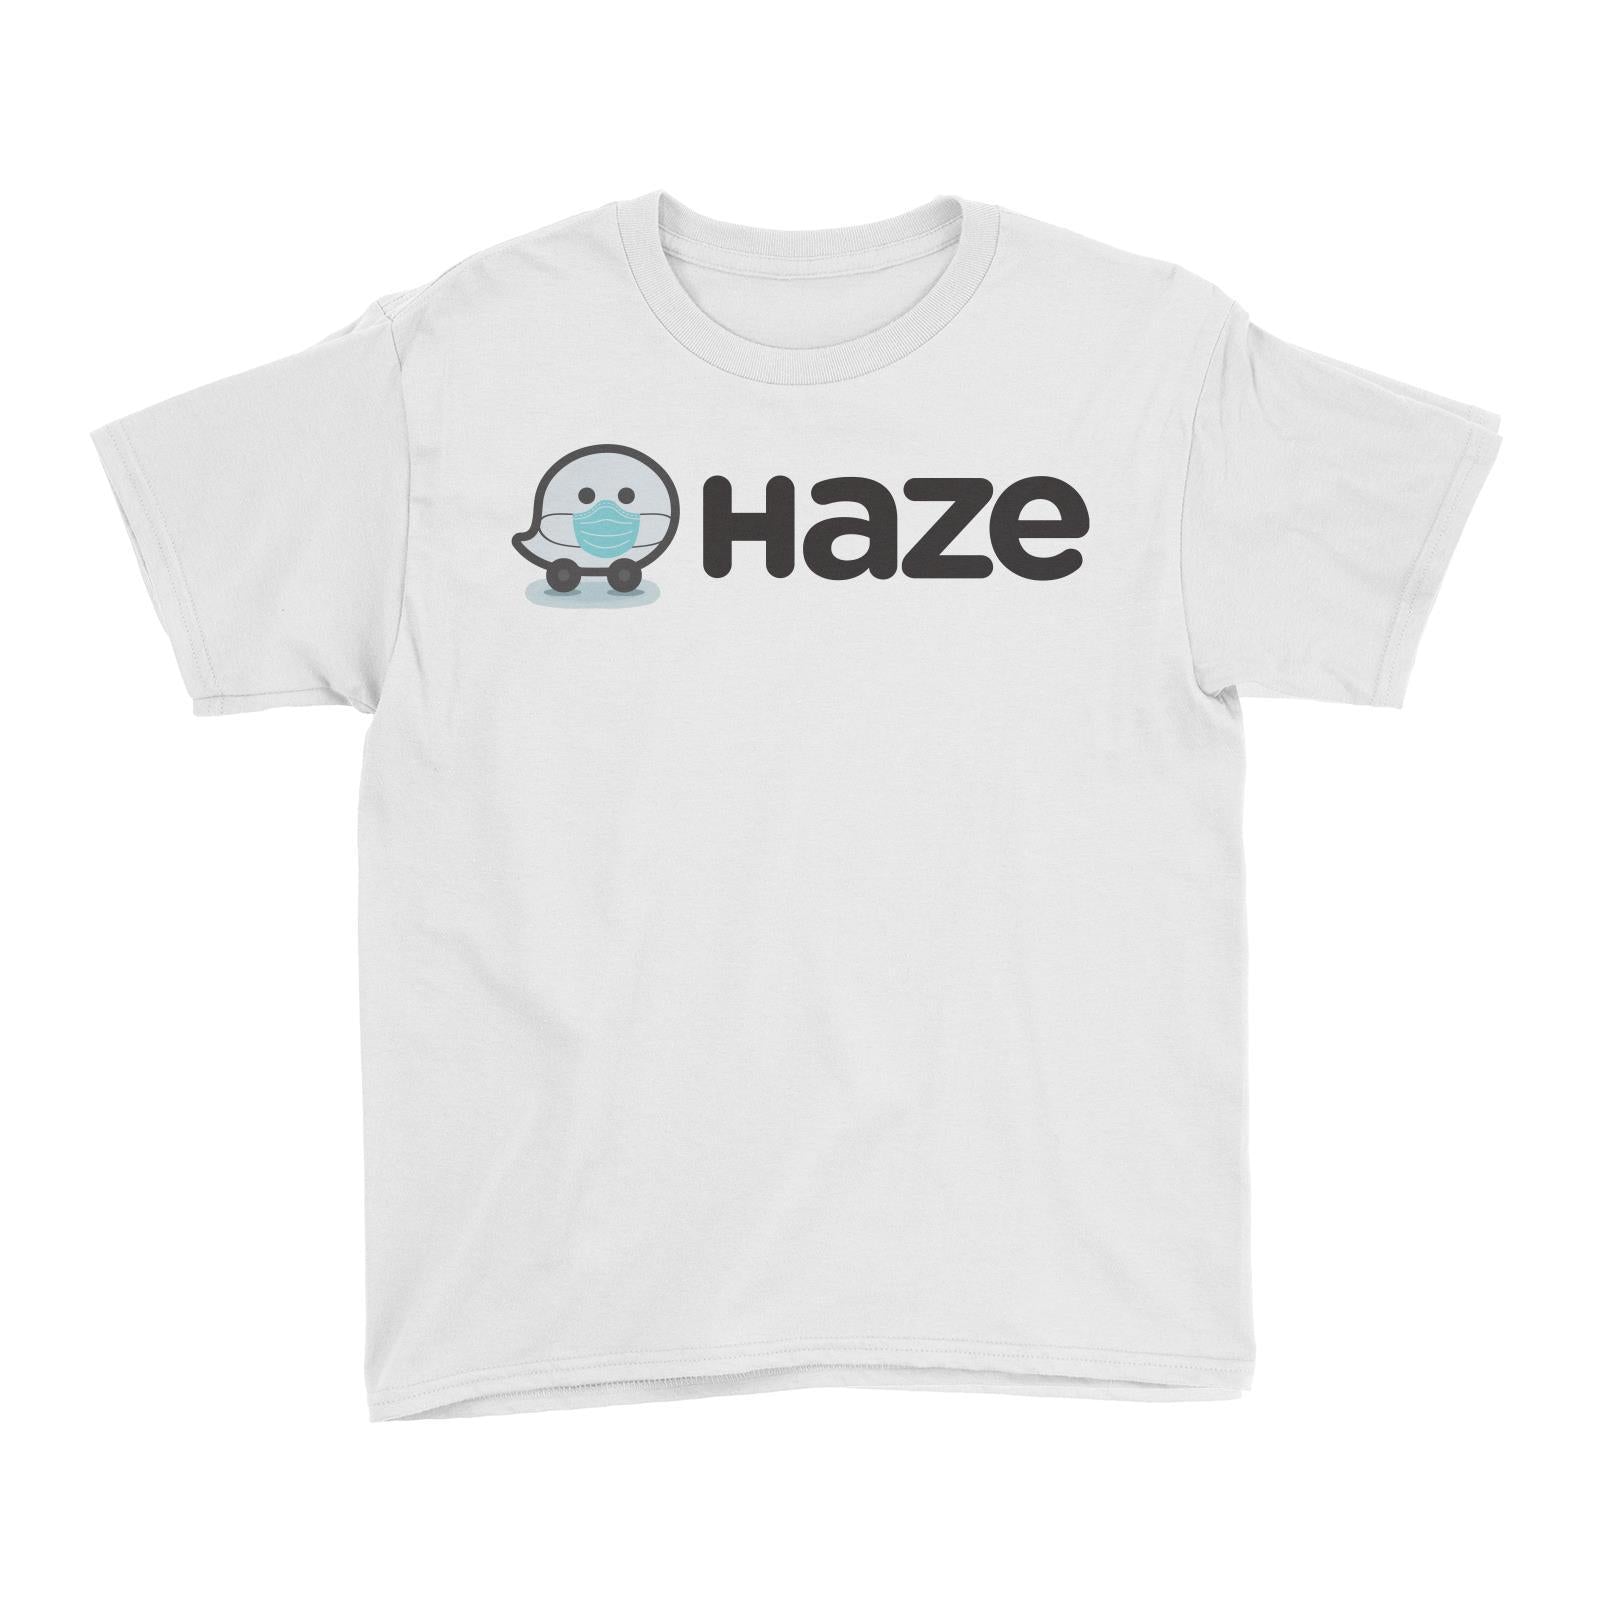 Slang Statement Haze Kid's T-Shirt